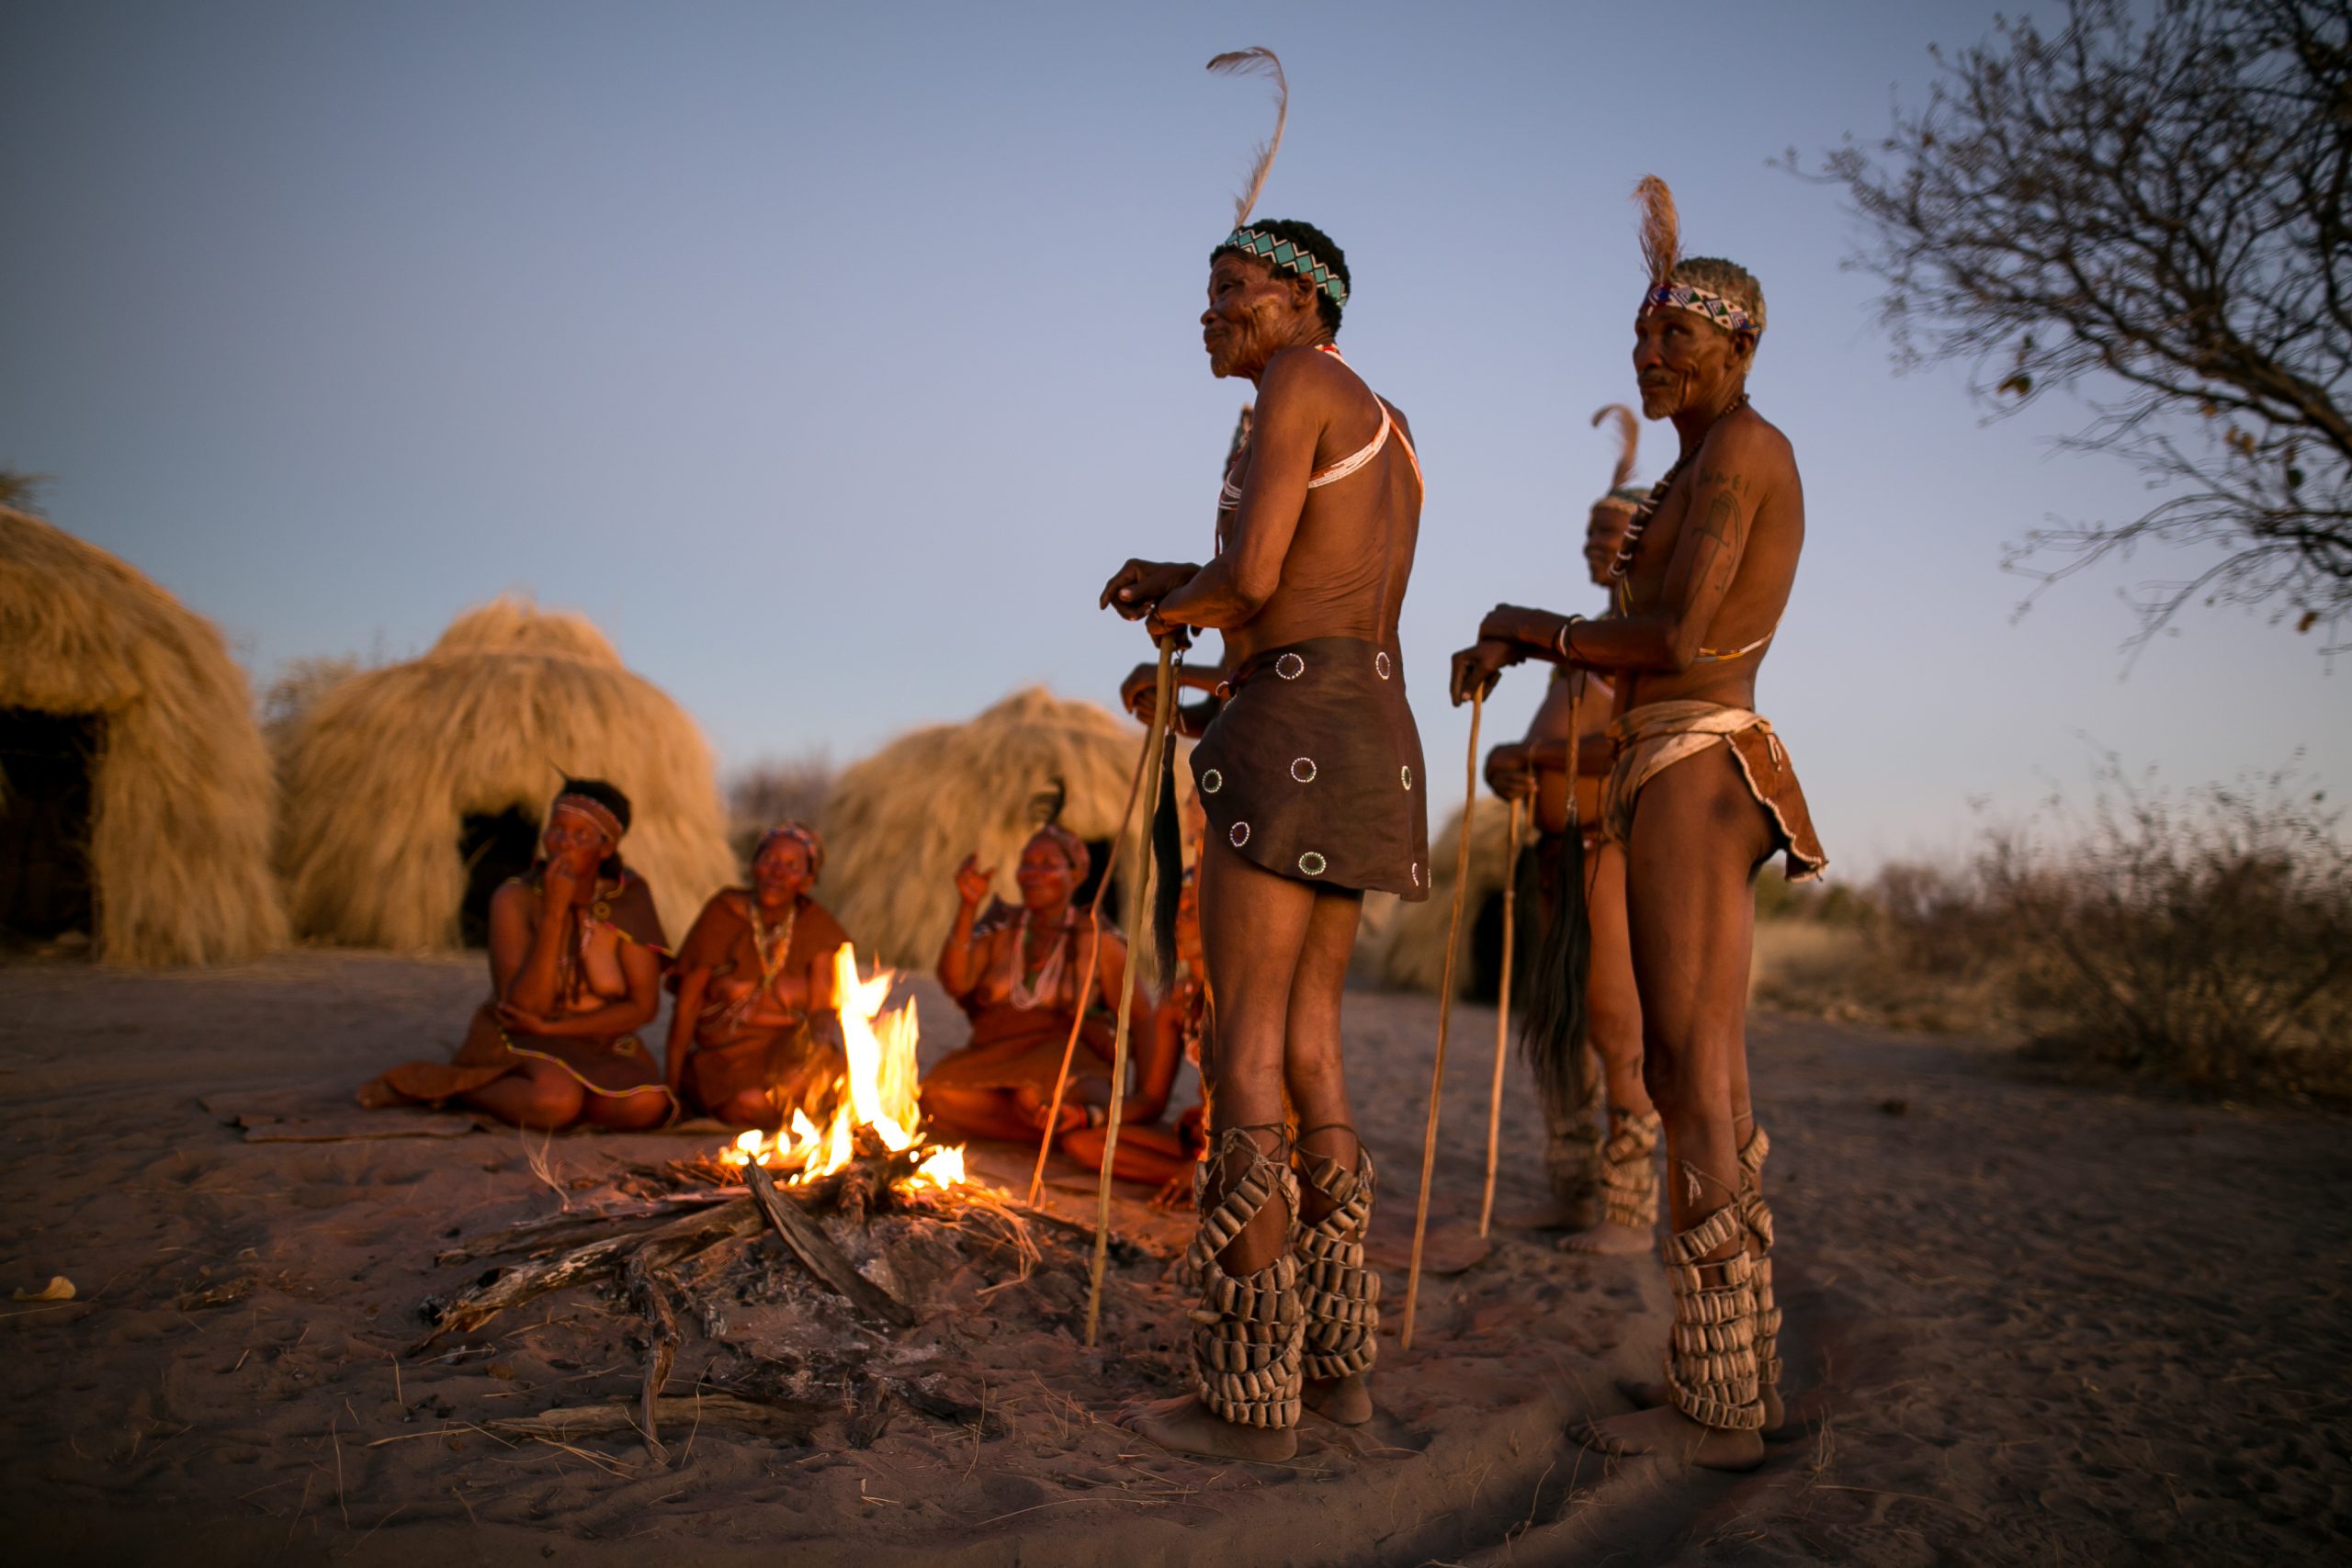 Bushman around fire in kalahari